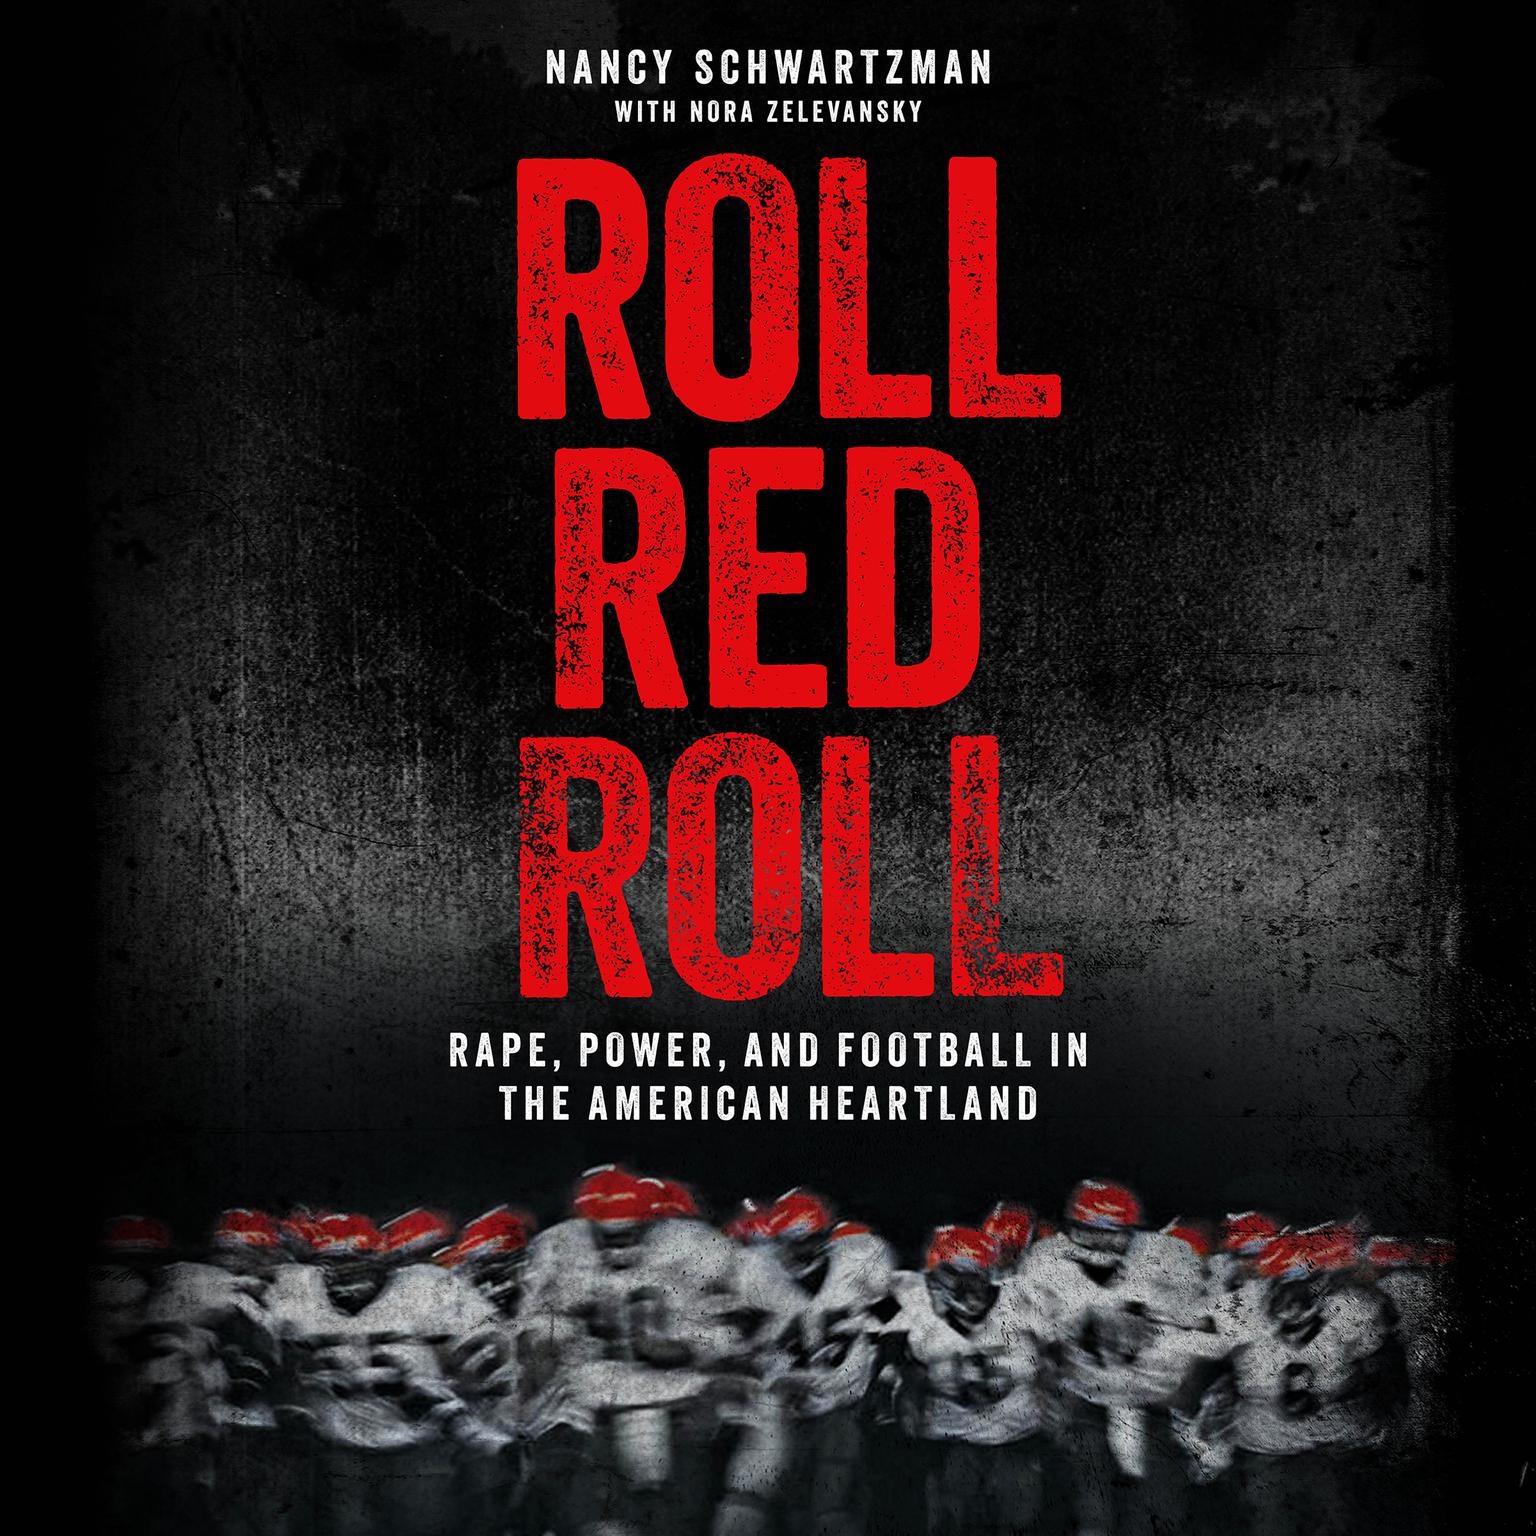 Roll Red Roll: Rape, Power, and Football in the American Heartland Audiobook, by Nancy Schwartzman